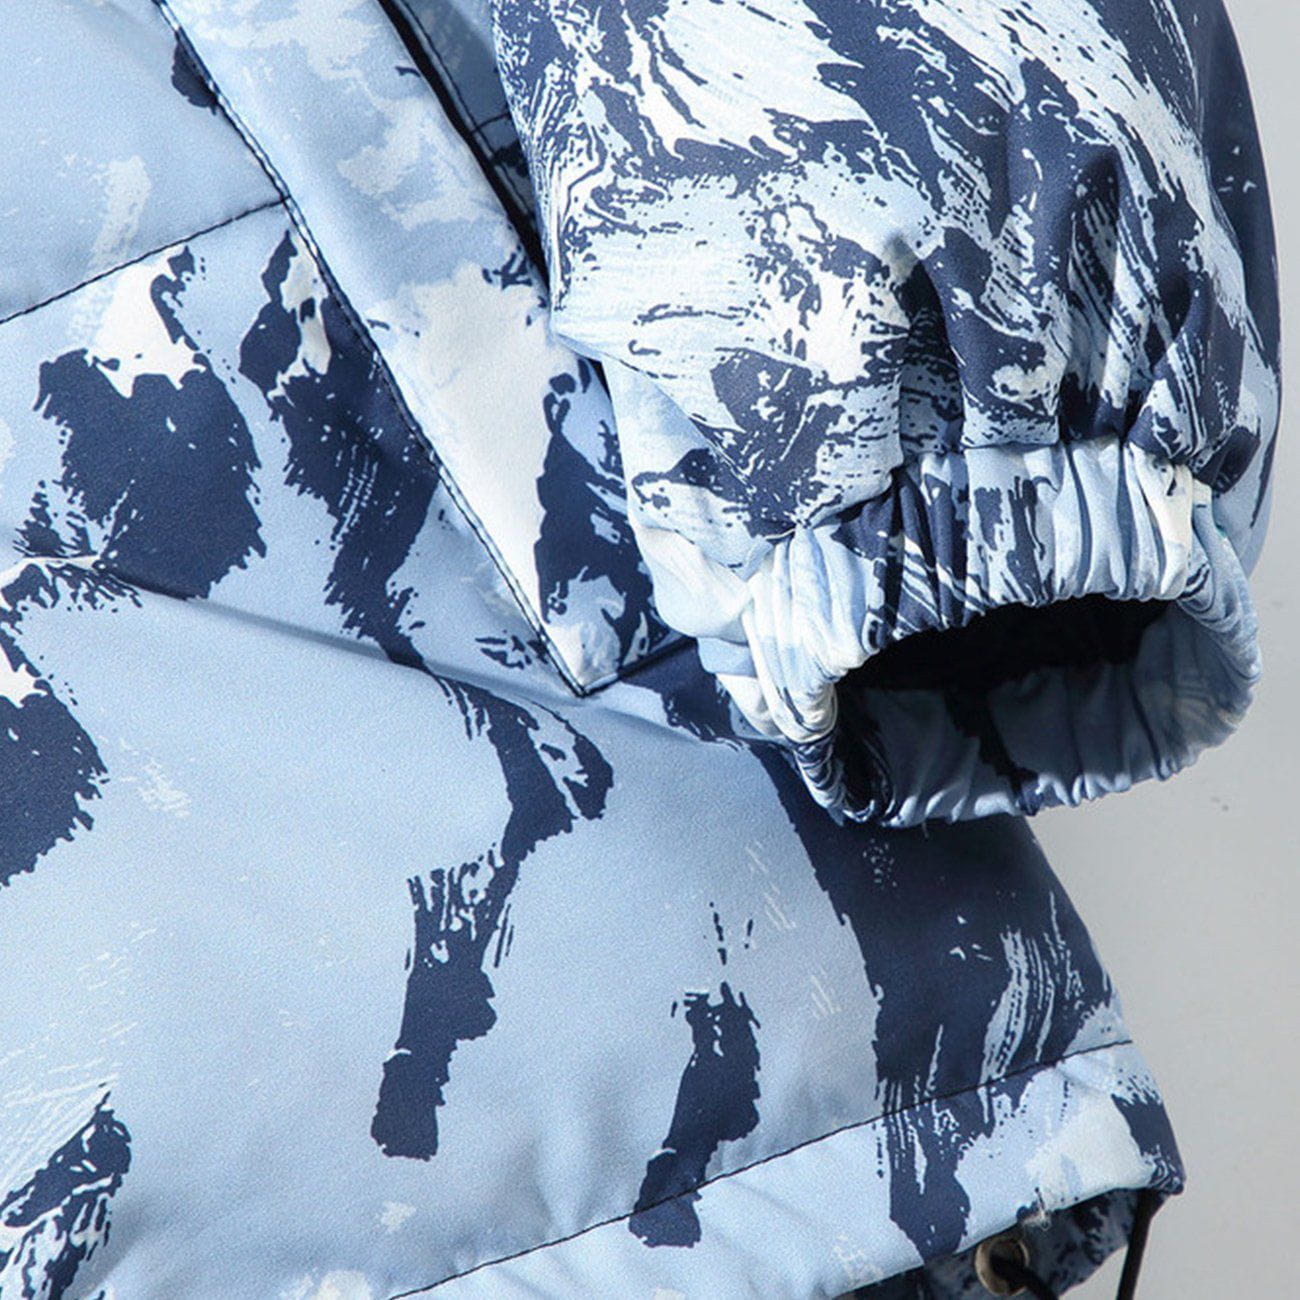 Eprezzy® - Printed Snow Mountain Hooded Puffer Jacket Streetwear Fashion - eprezzy.com